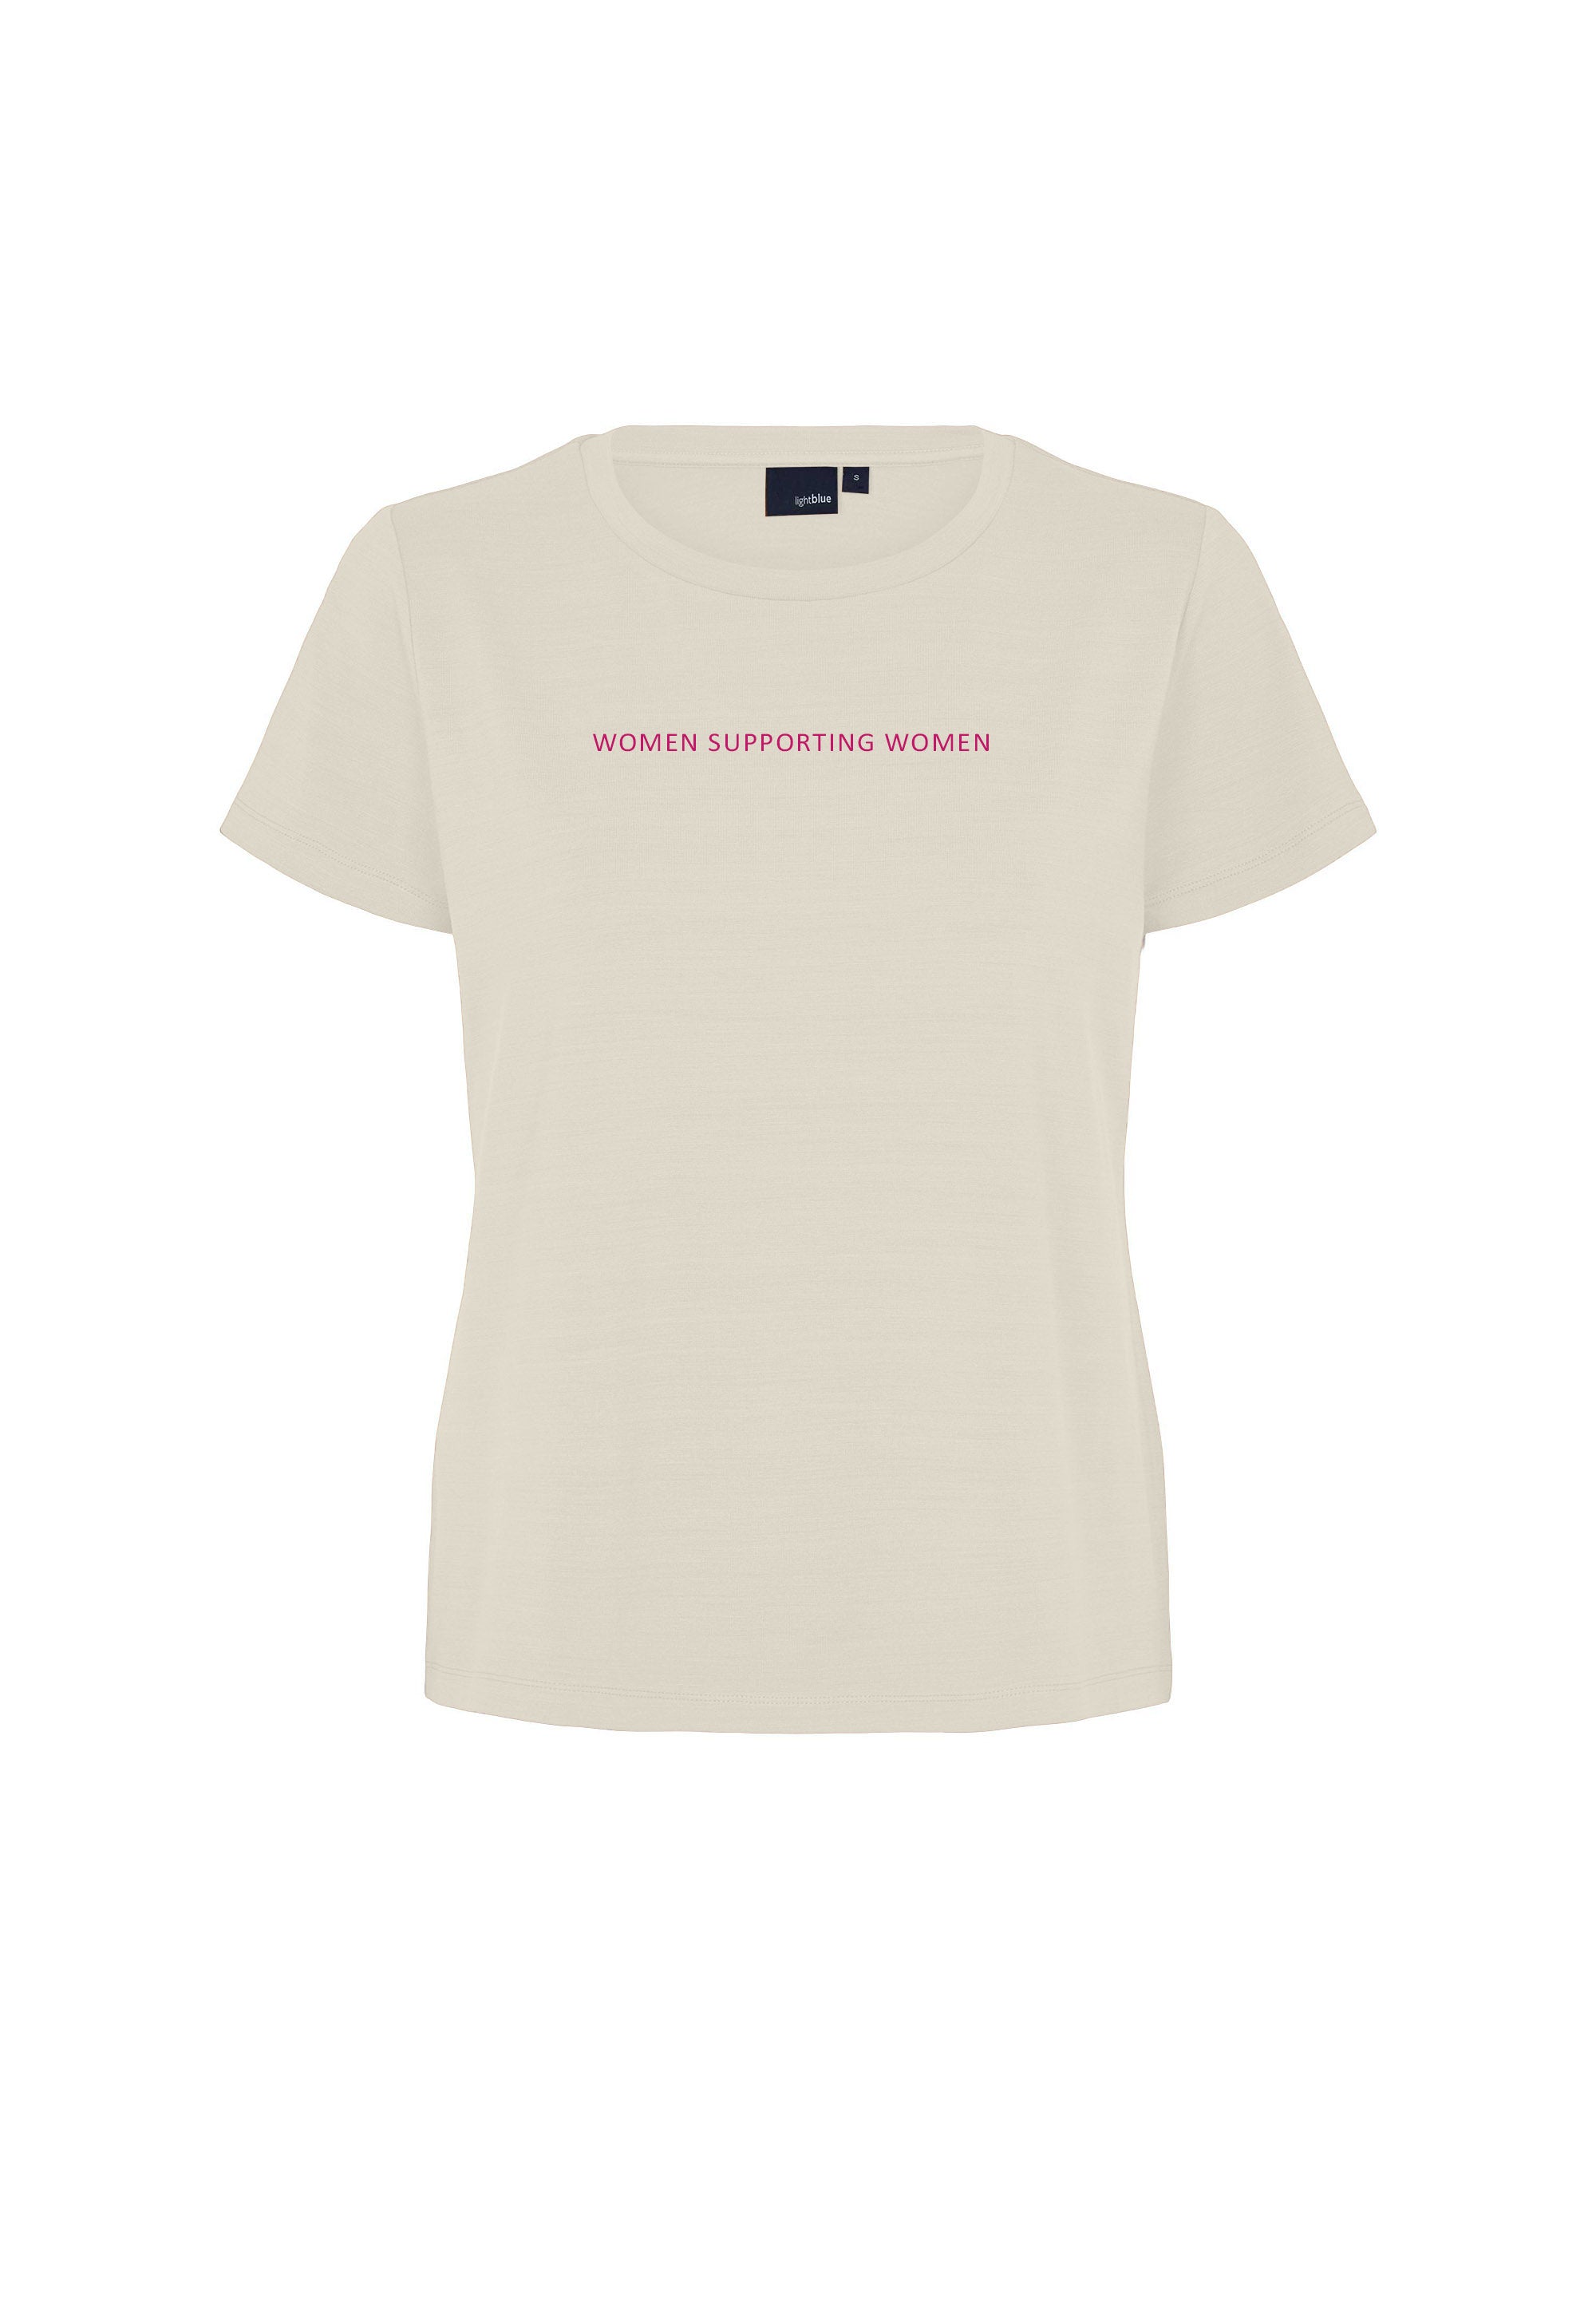 LAURIE Amanda - Women supporting Women Jersey T-Shirt T-Shirts Pink Print